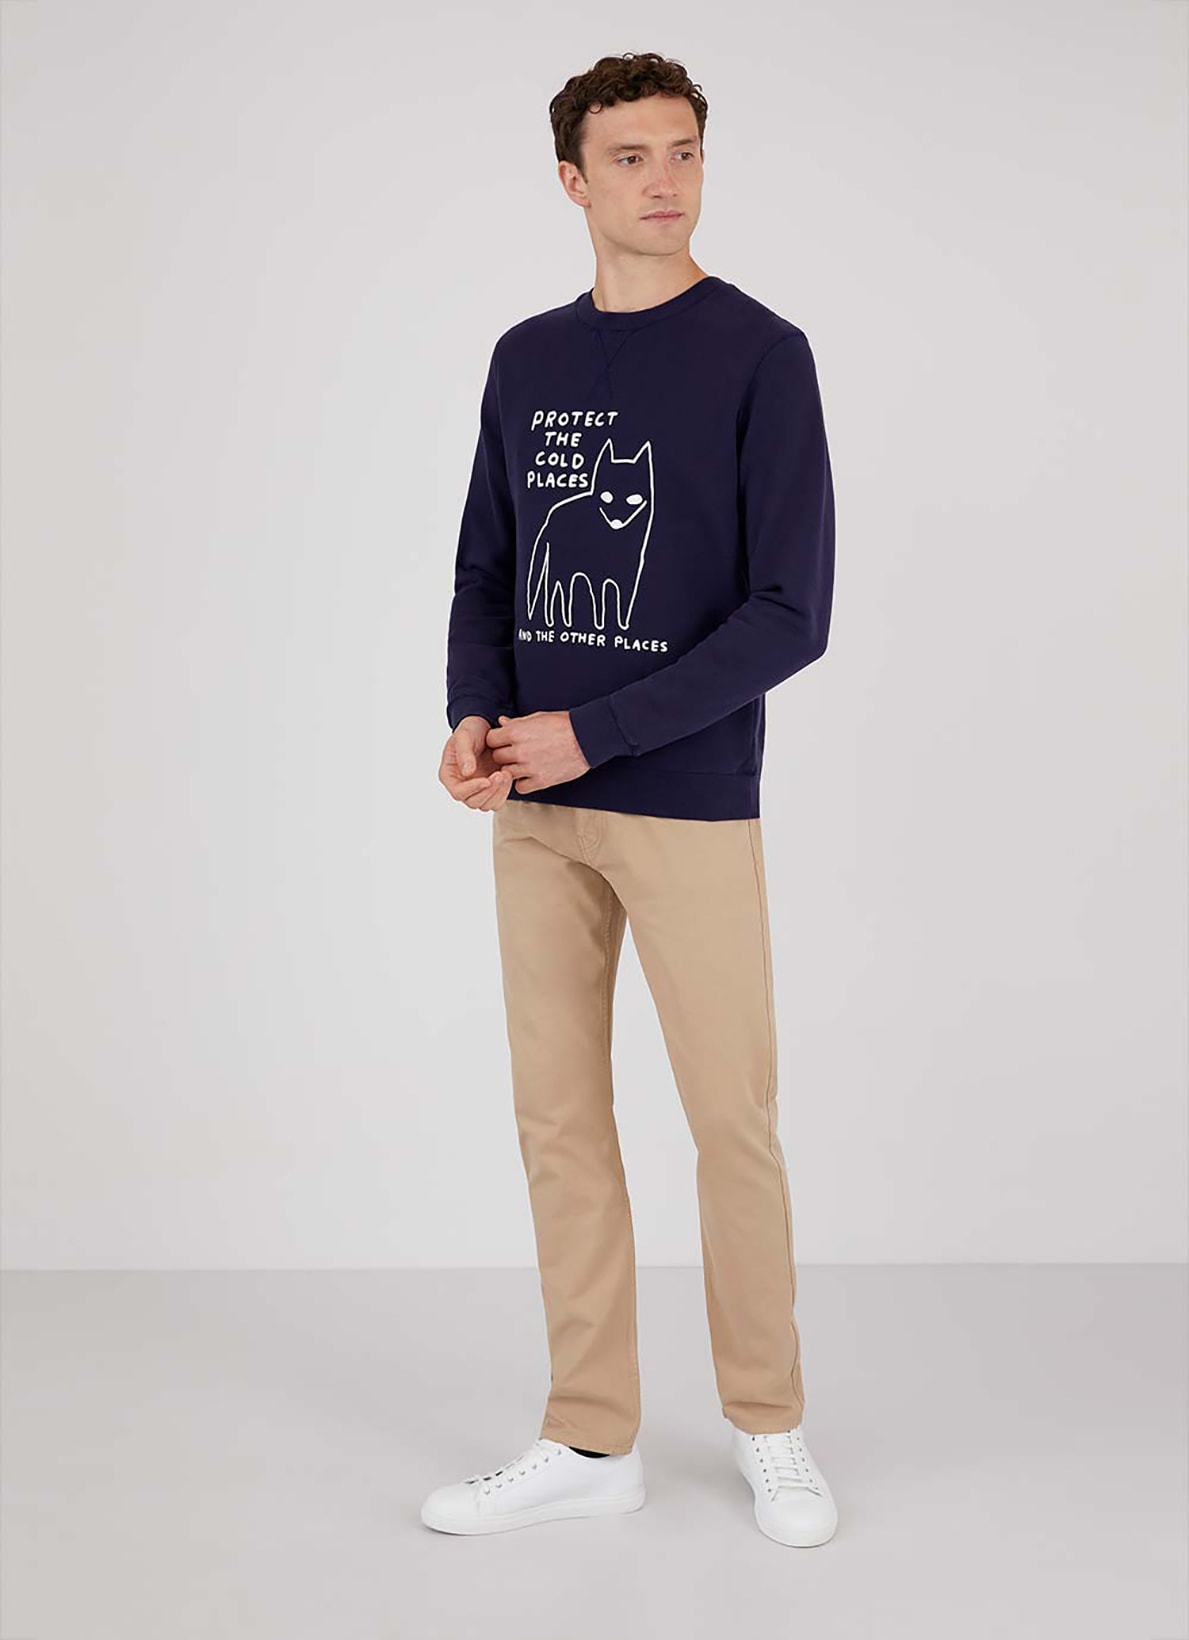 sunspel david shrigley obe collaboration christmas sweaters jumpers environmental awareness gray navy blue 